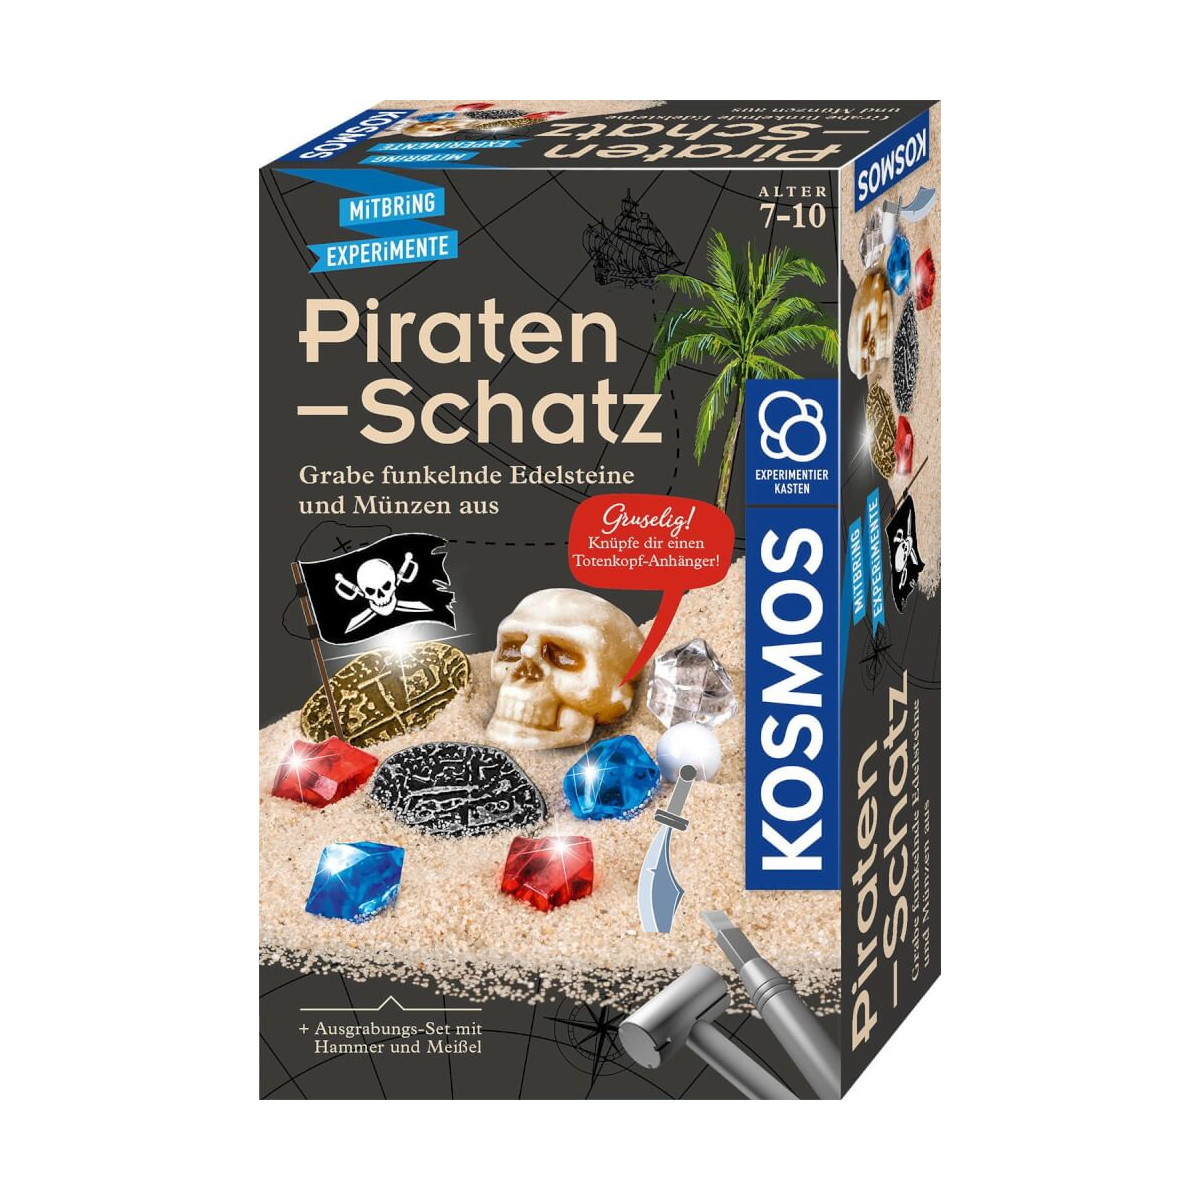 Piraten Schatz